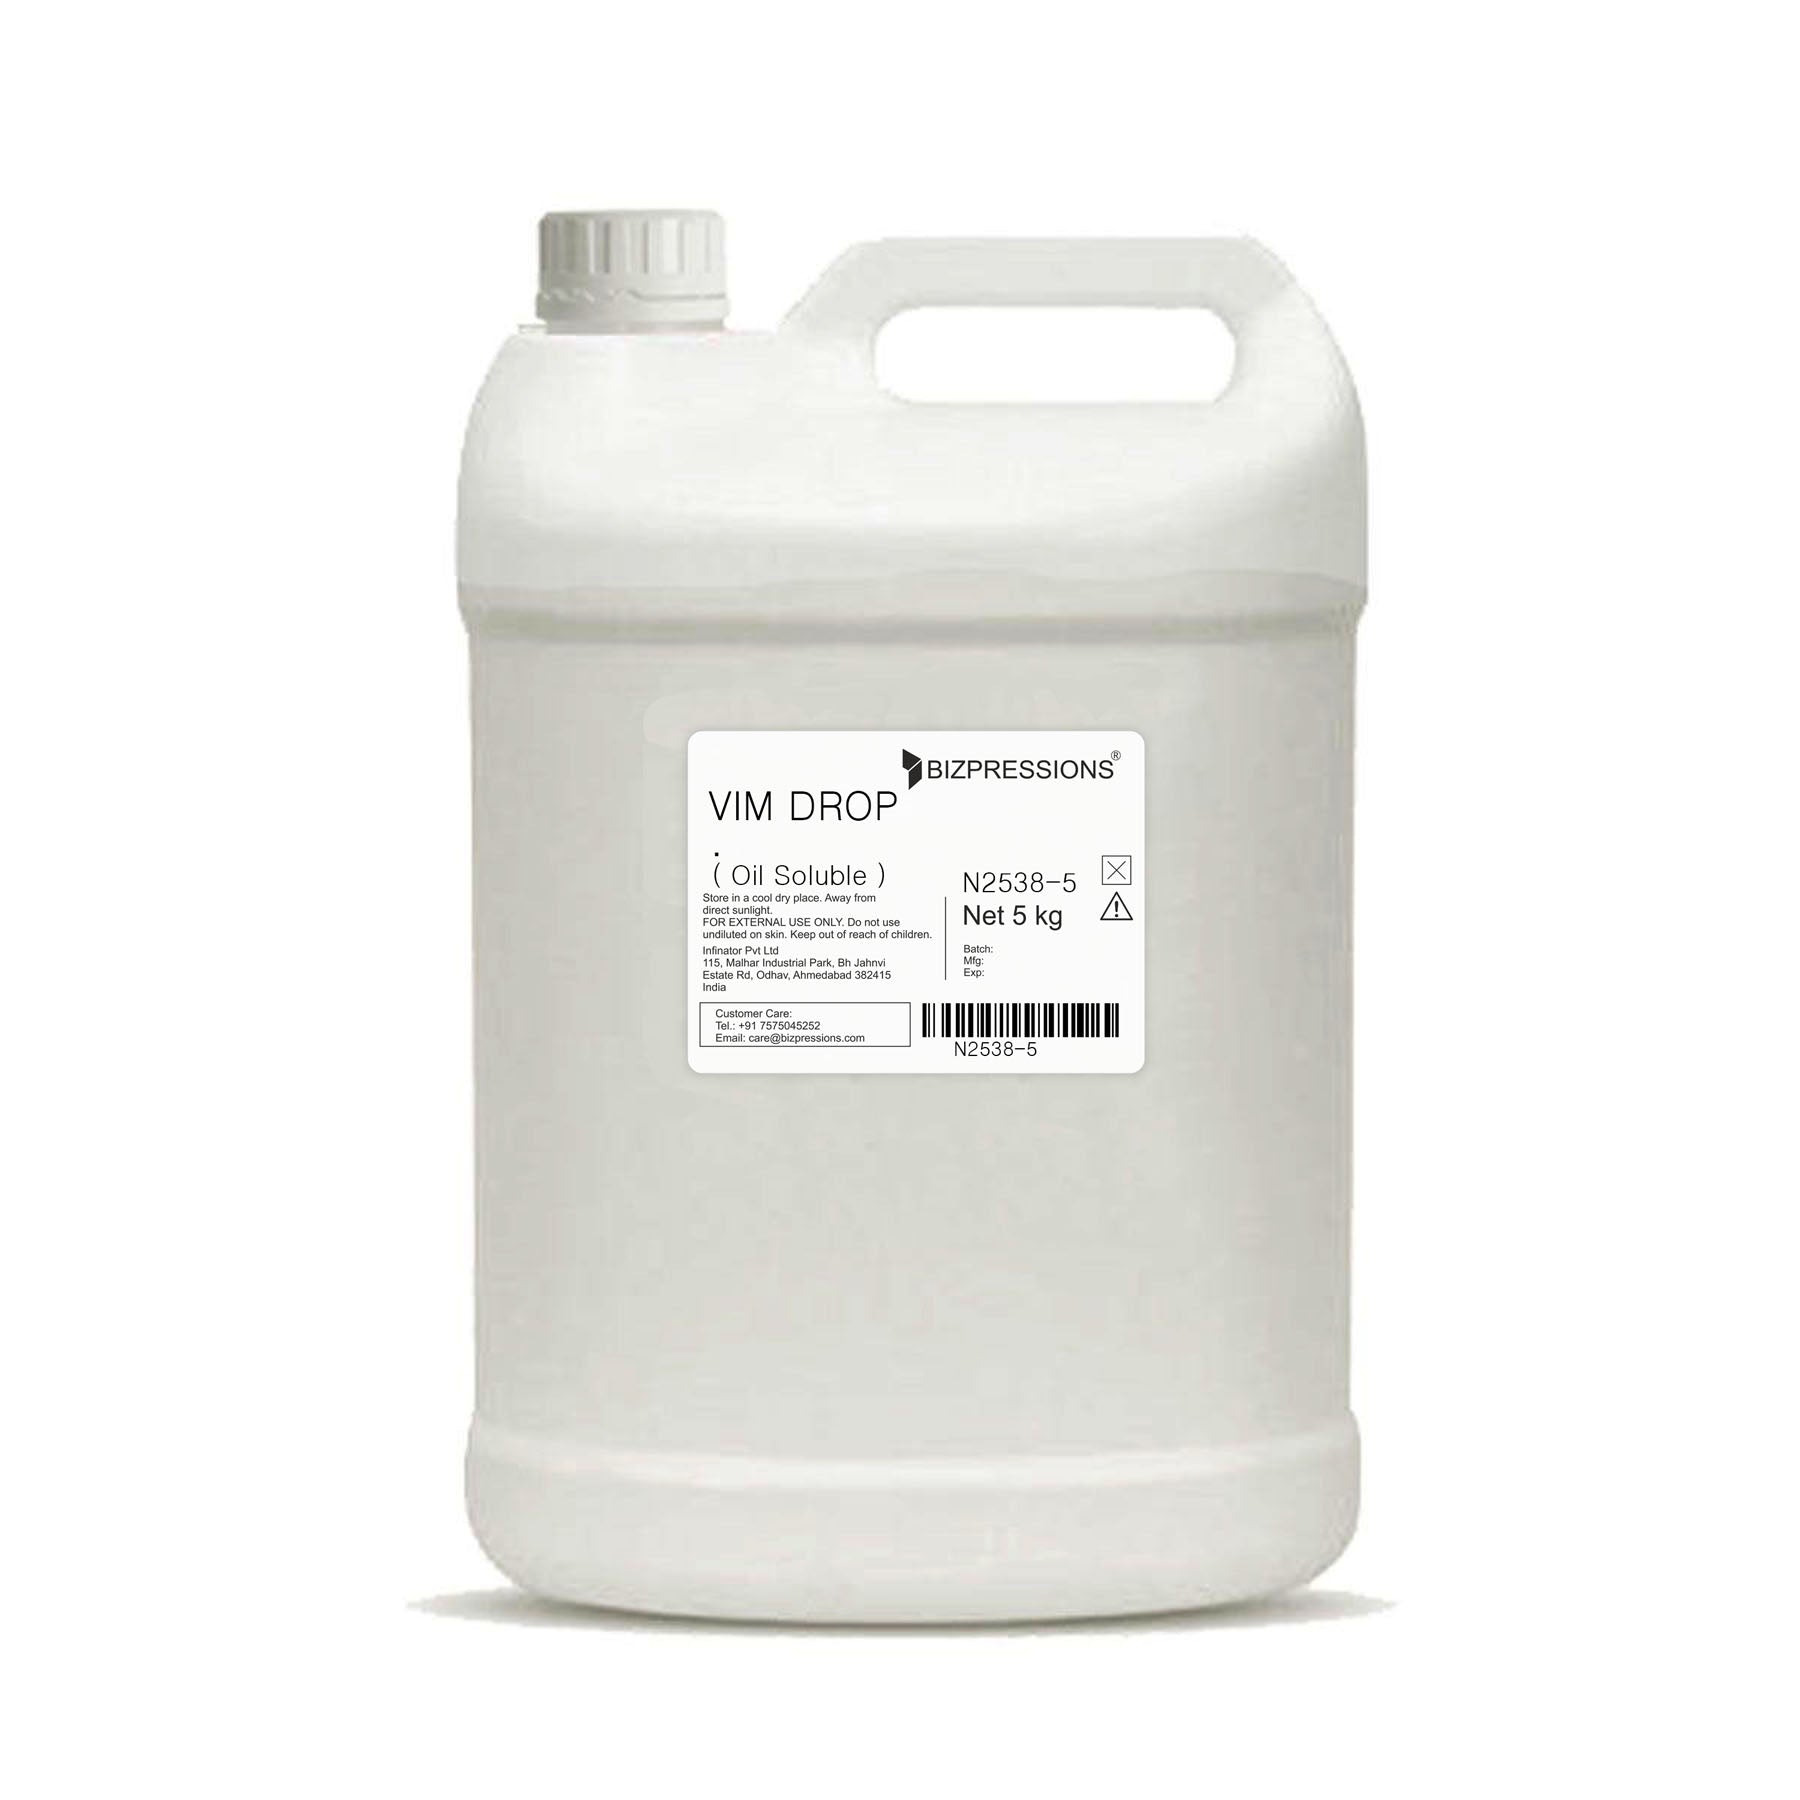 VIM DROP - Fragrance ( Oil Soluble ) - 5 kg